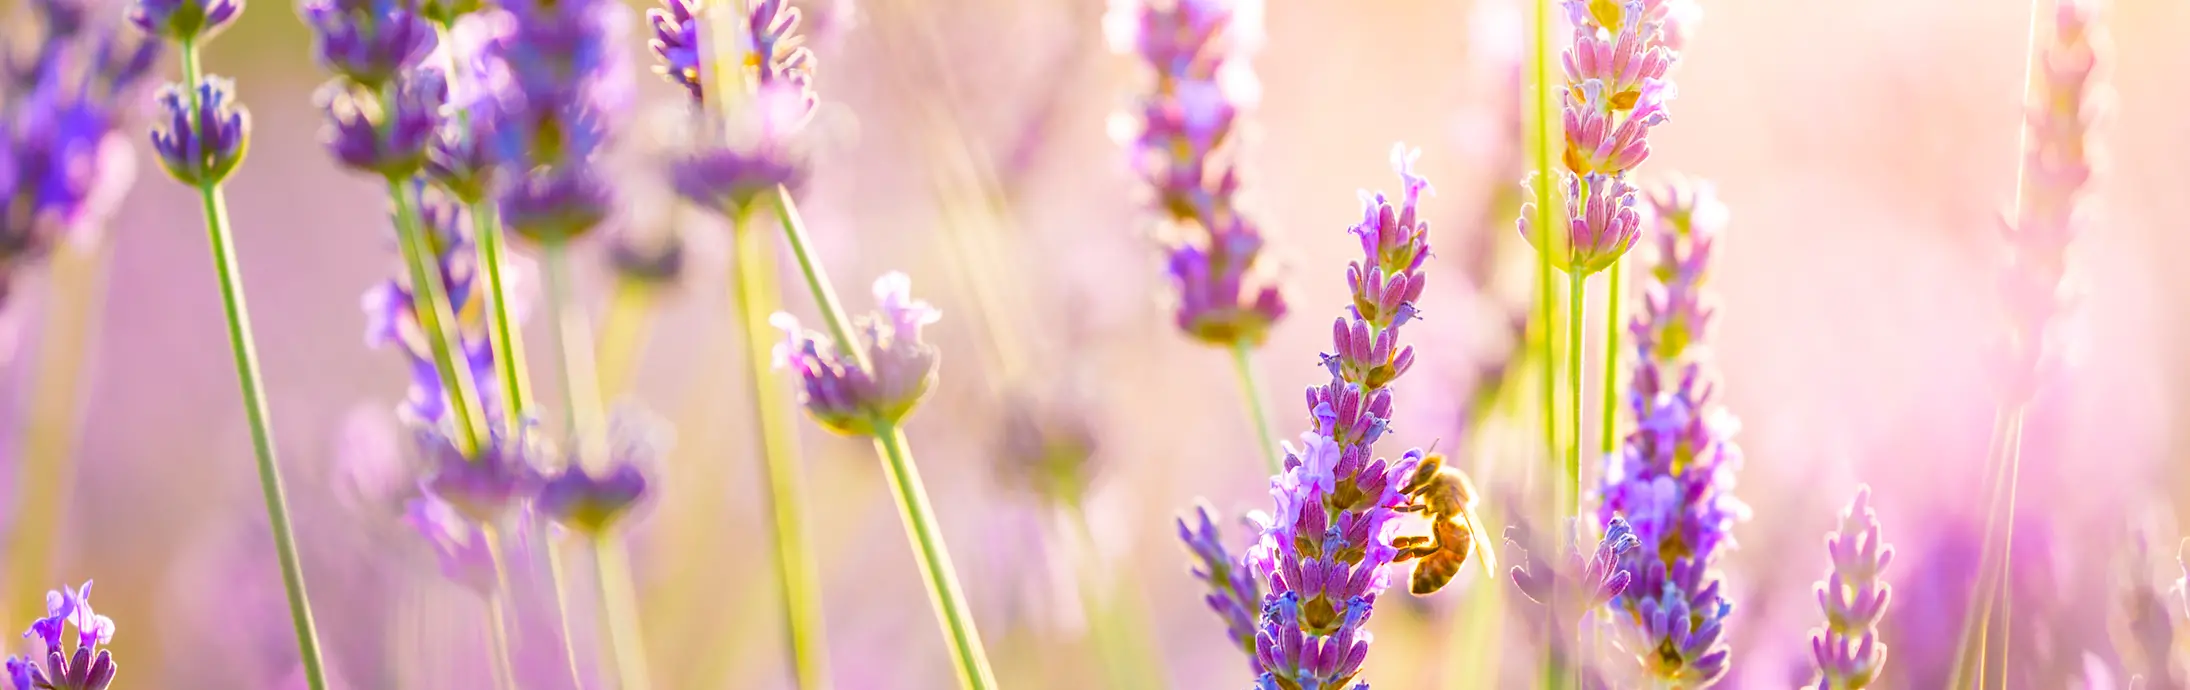 A lavender field